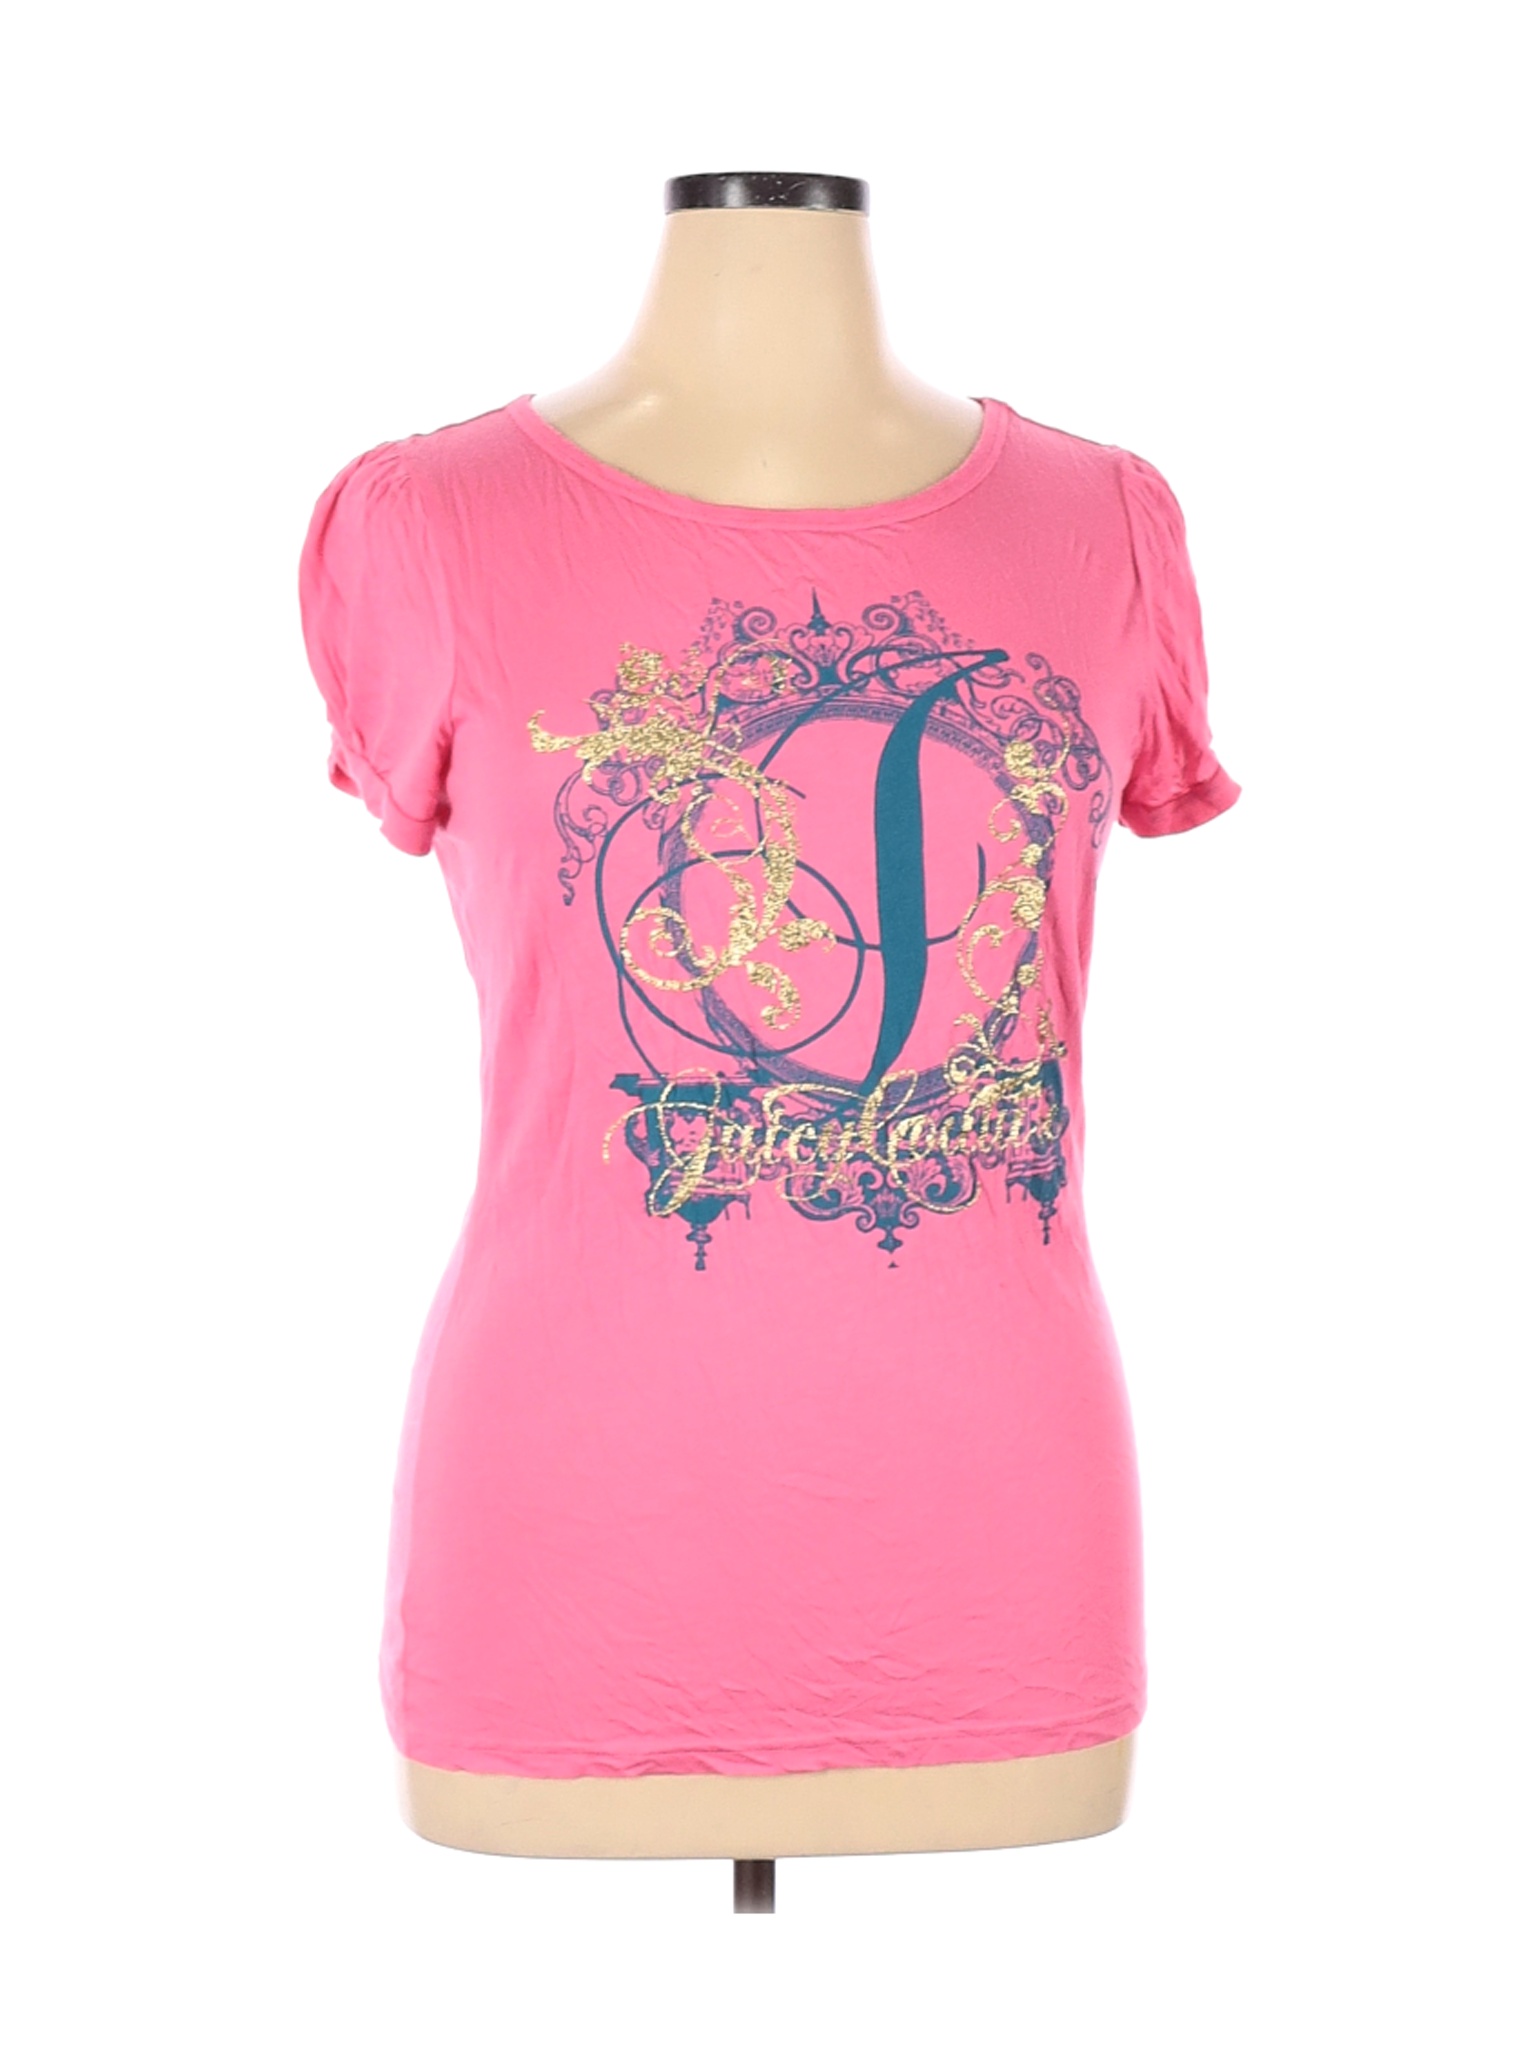 Juicy Couture Women Pink Short Sleeve T-Shirt XL | eBay